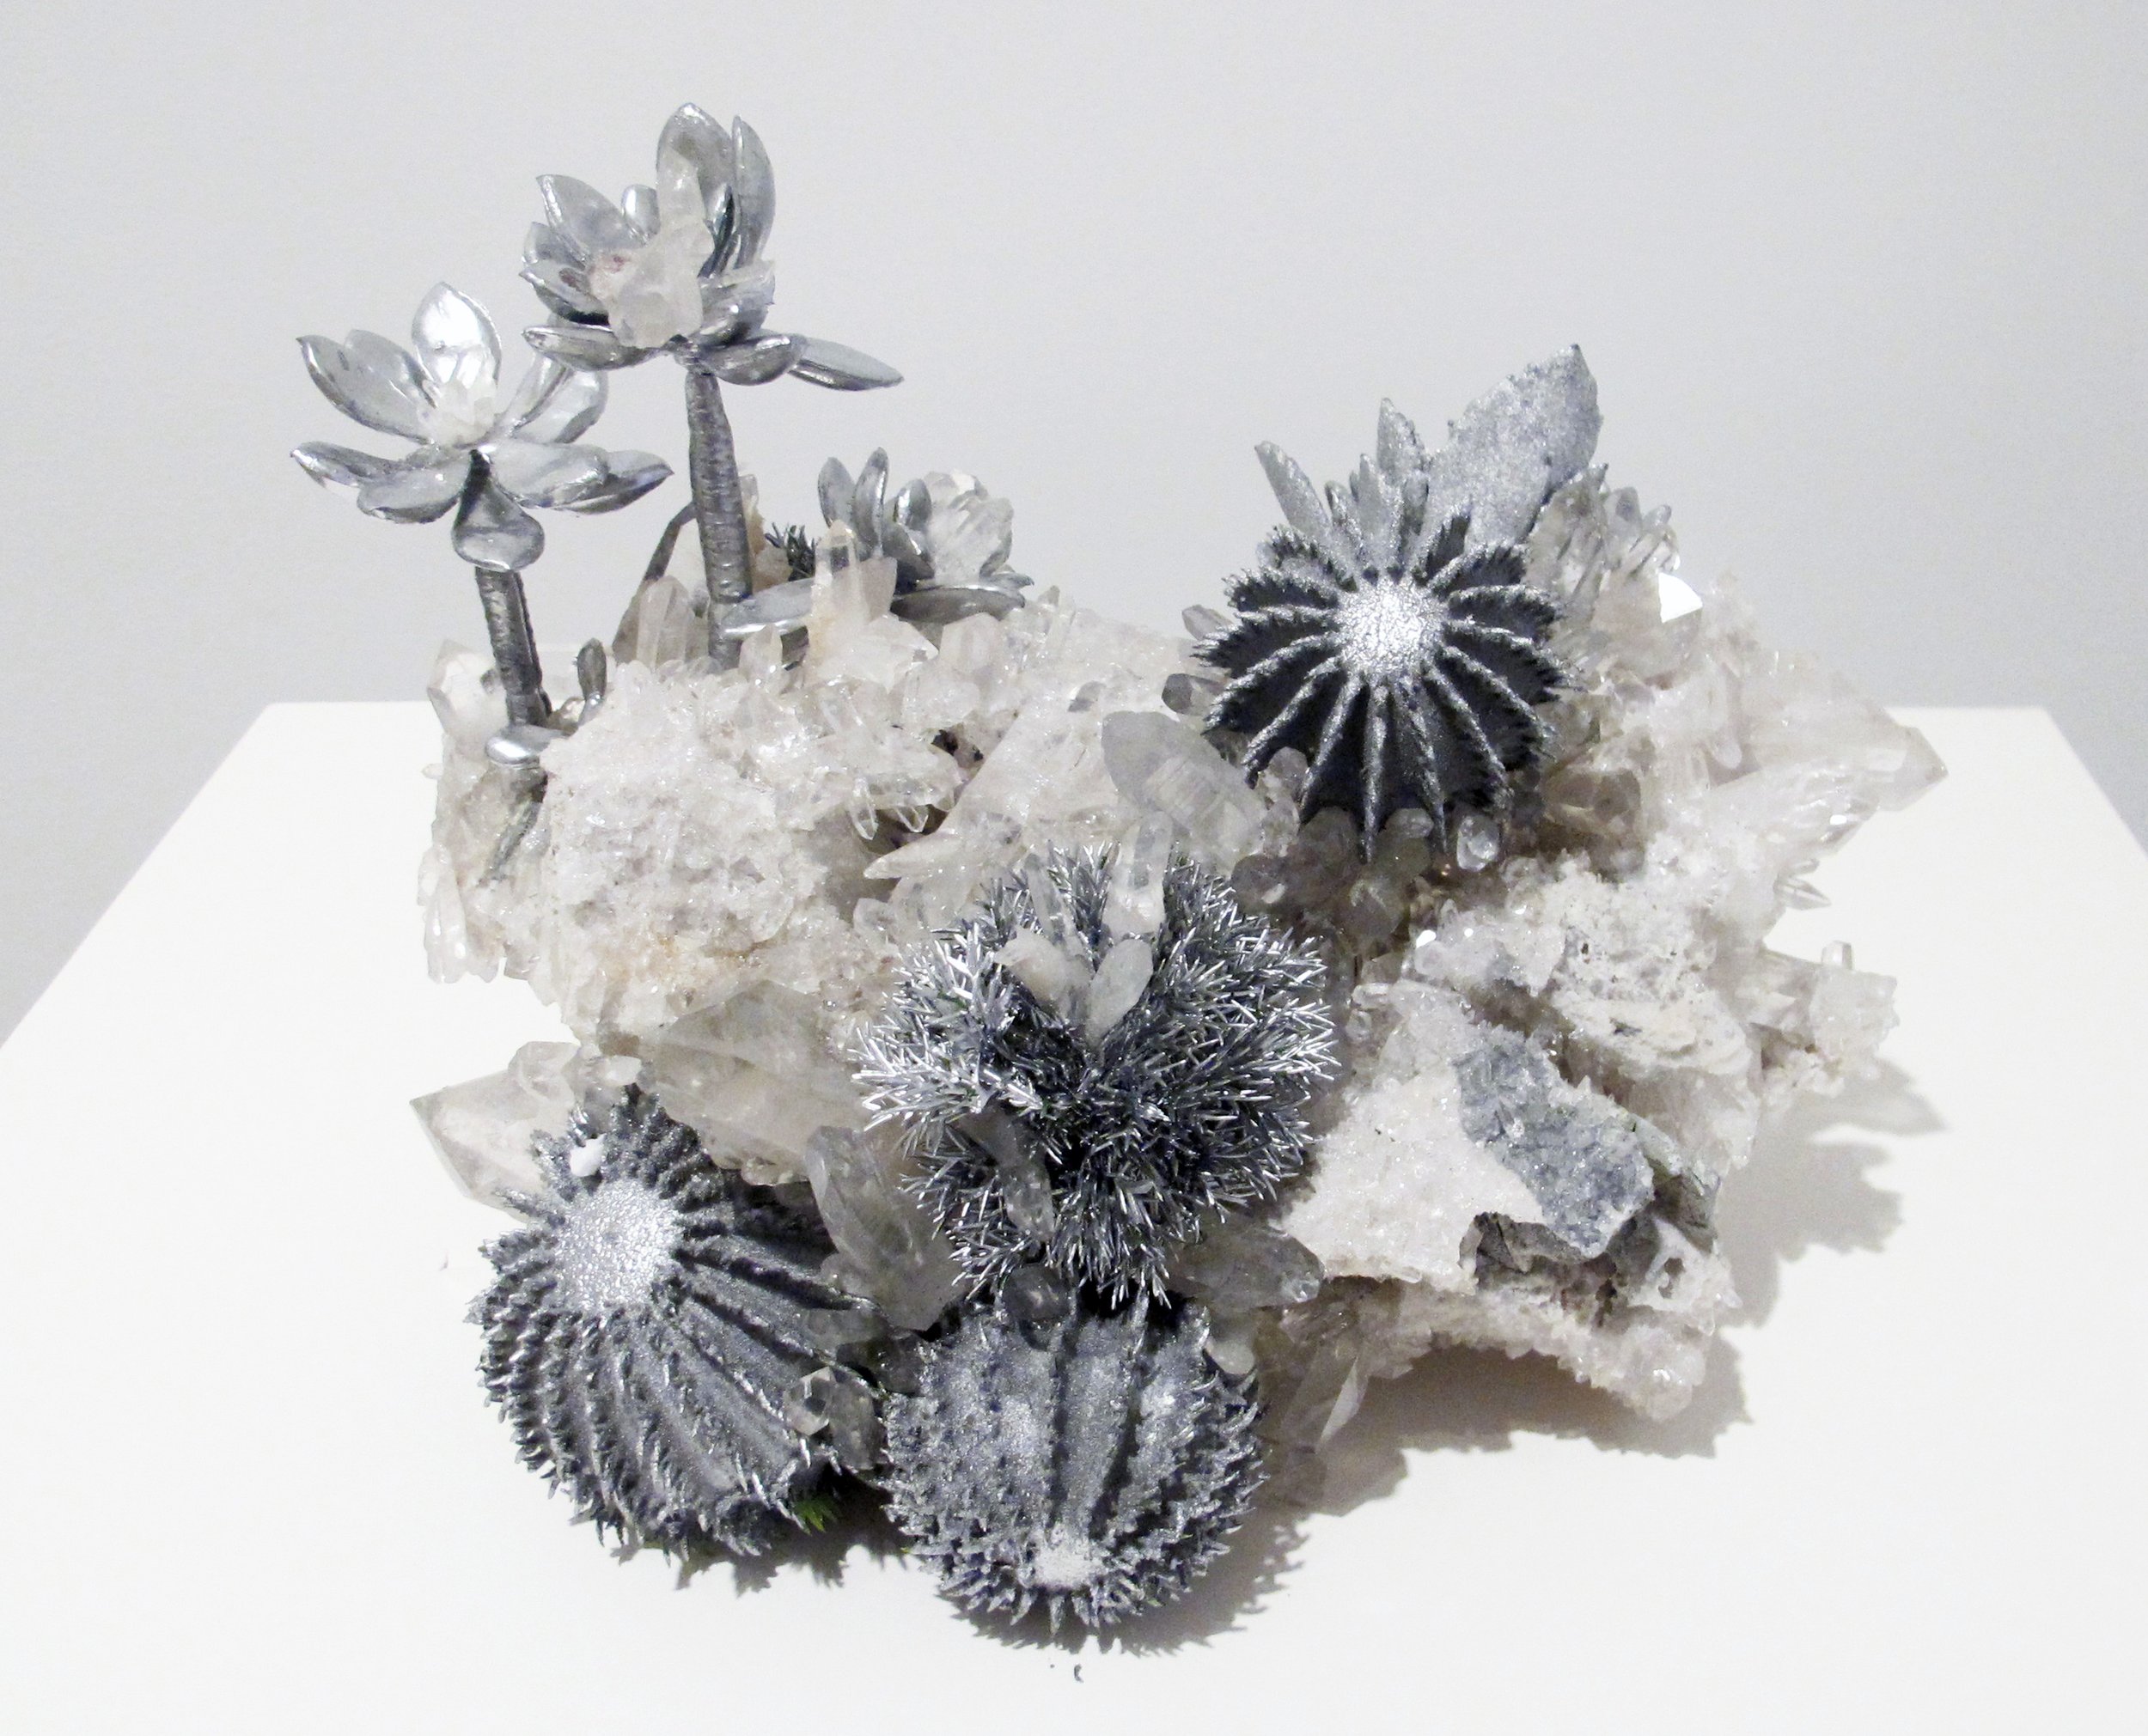 Untitled (Cactus Crystal)